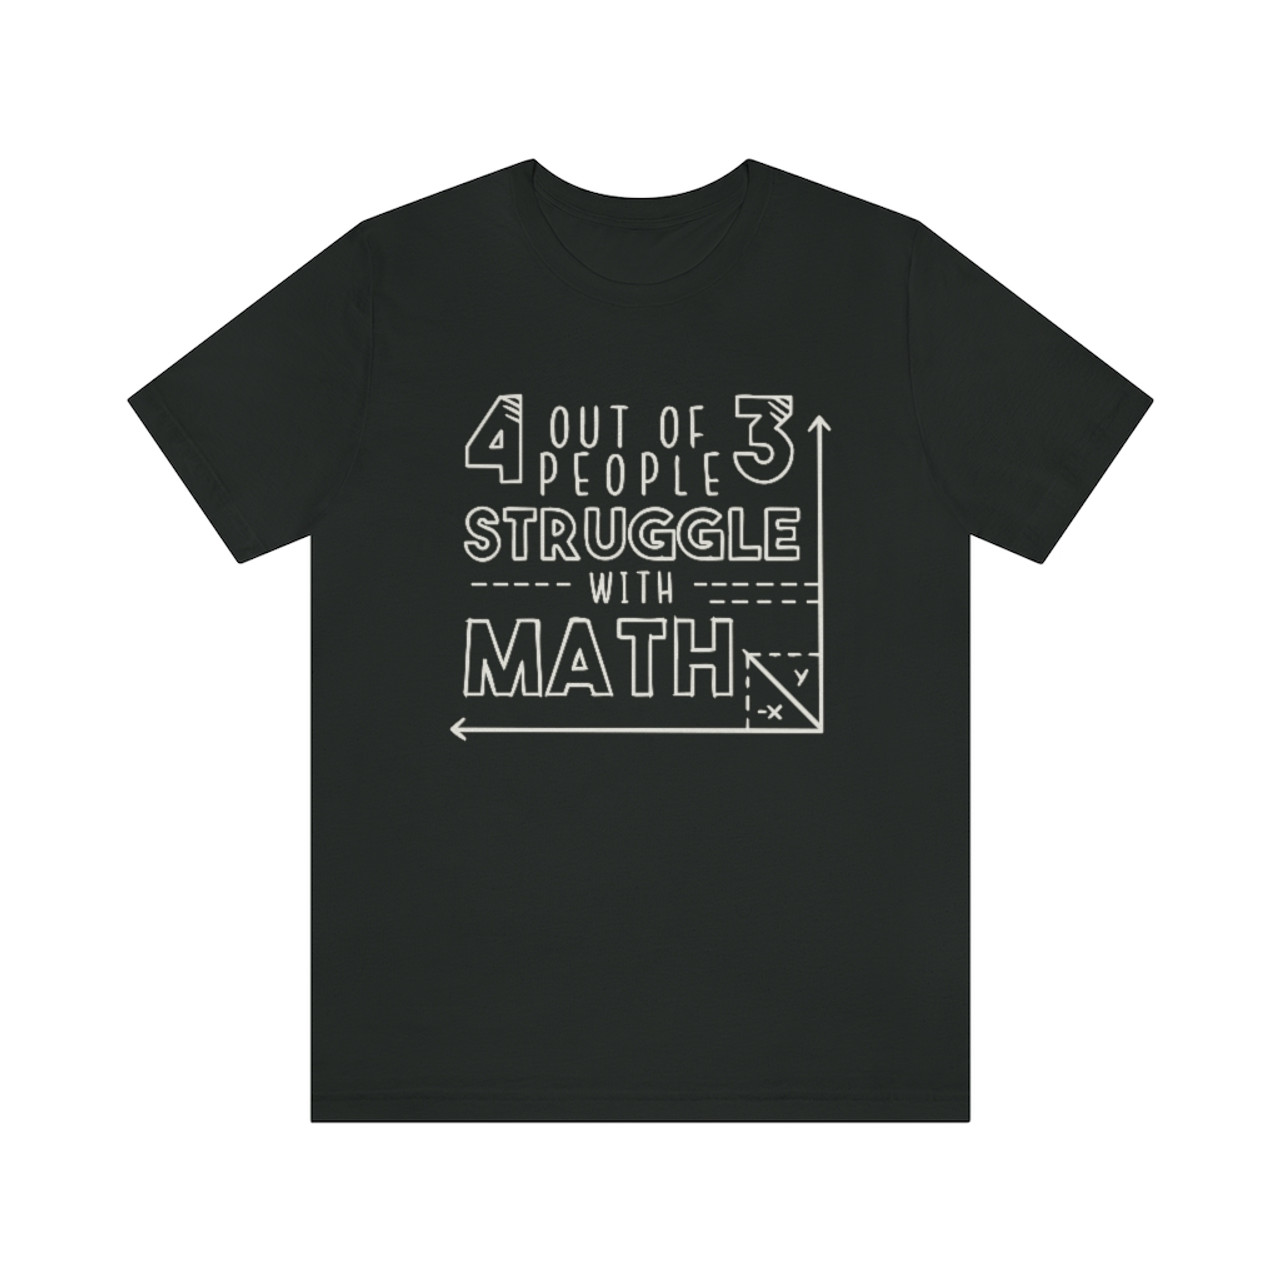 "People struggle with Math" Crew Neck T-shirt